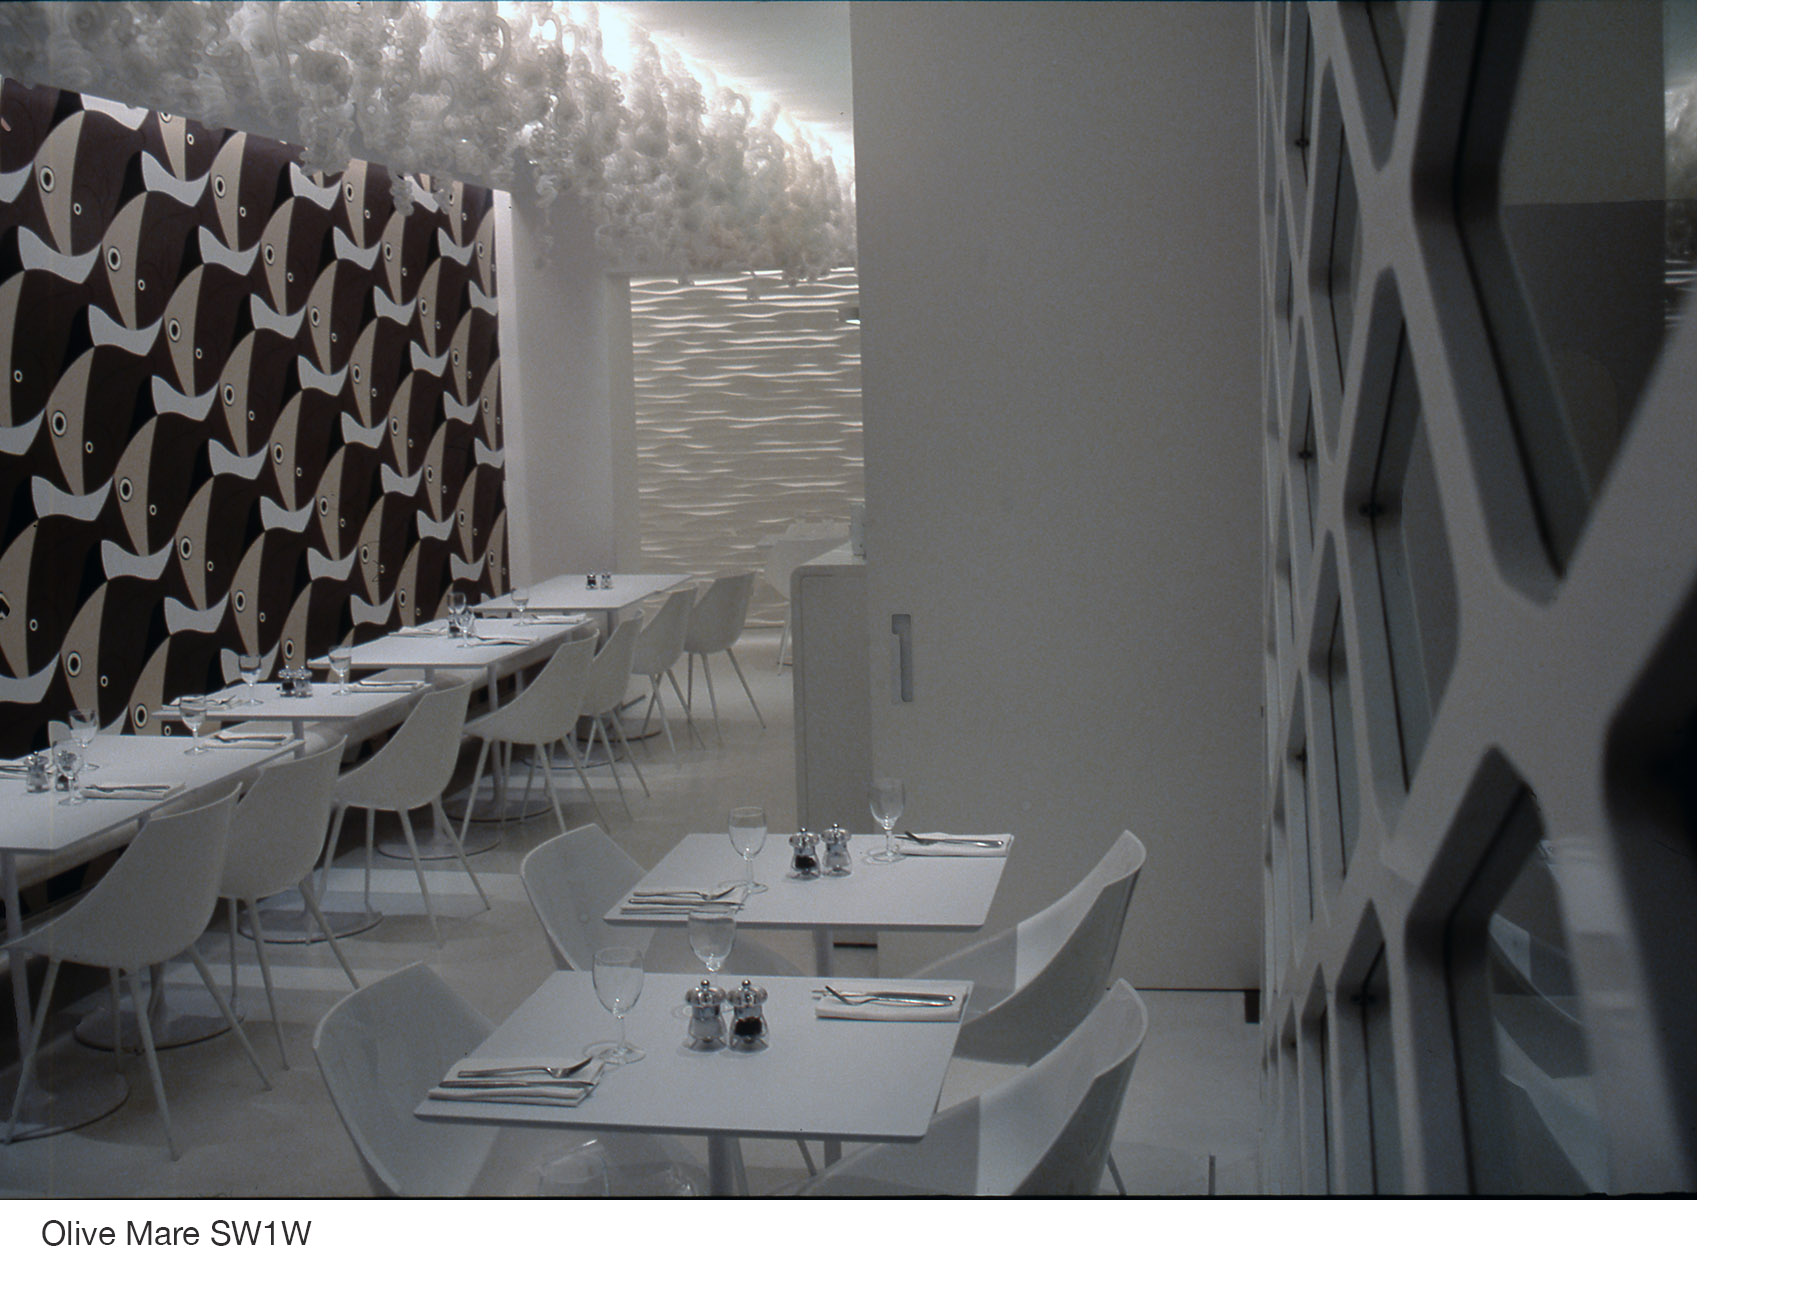 olivo mare restaurant Interior made by jonathan perrott